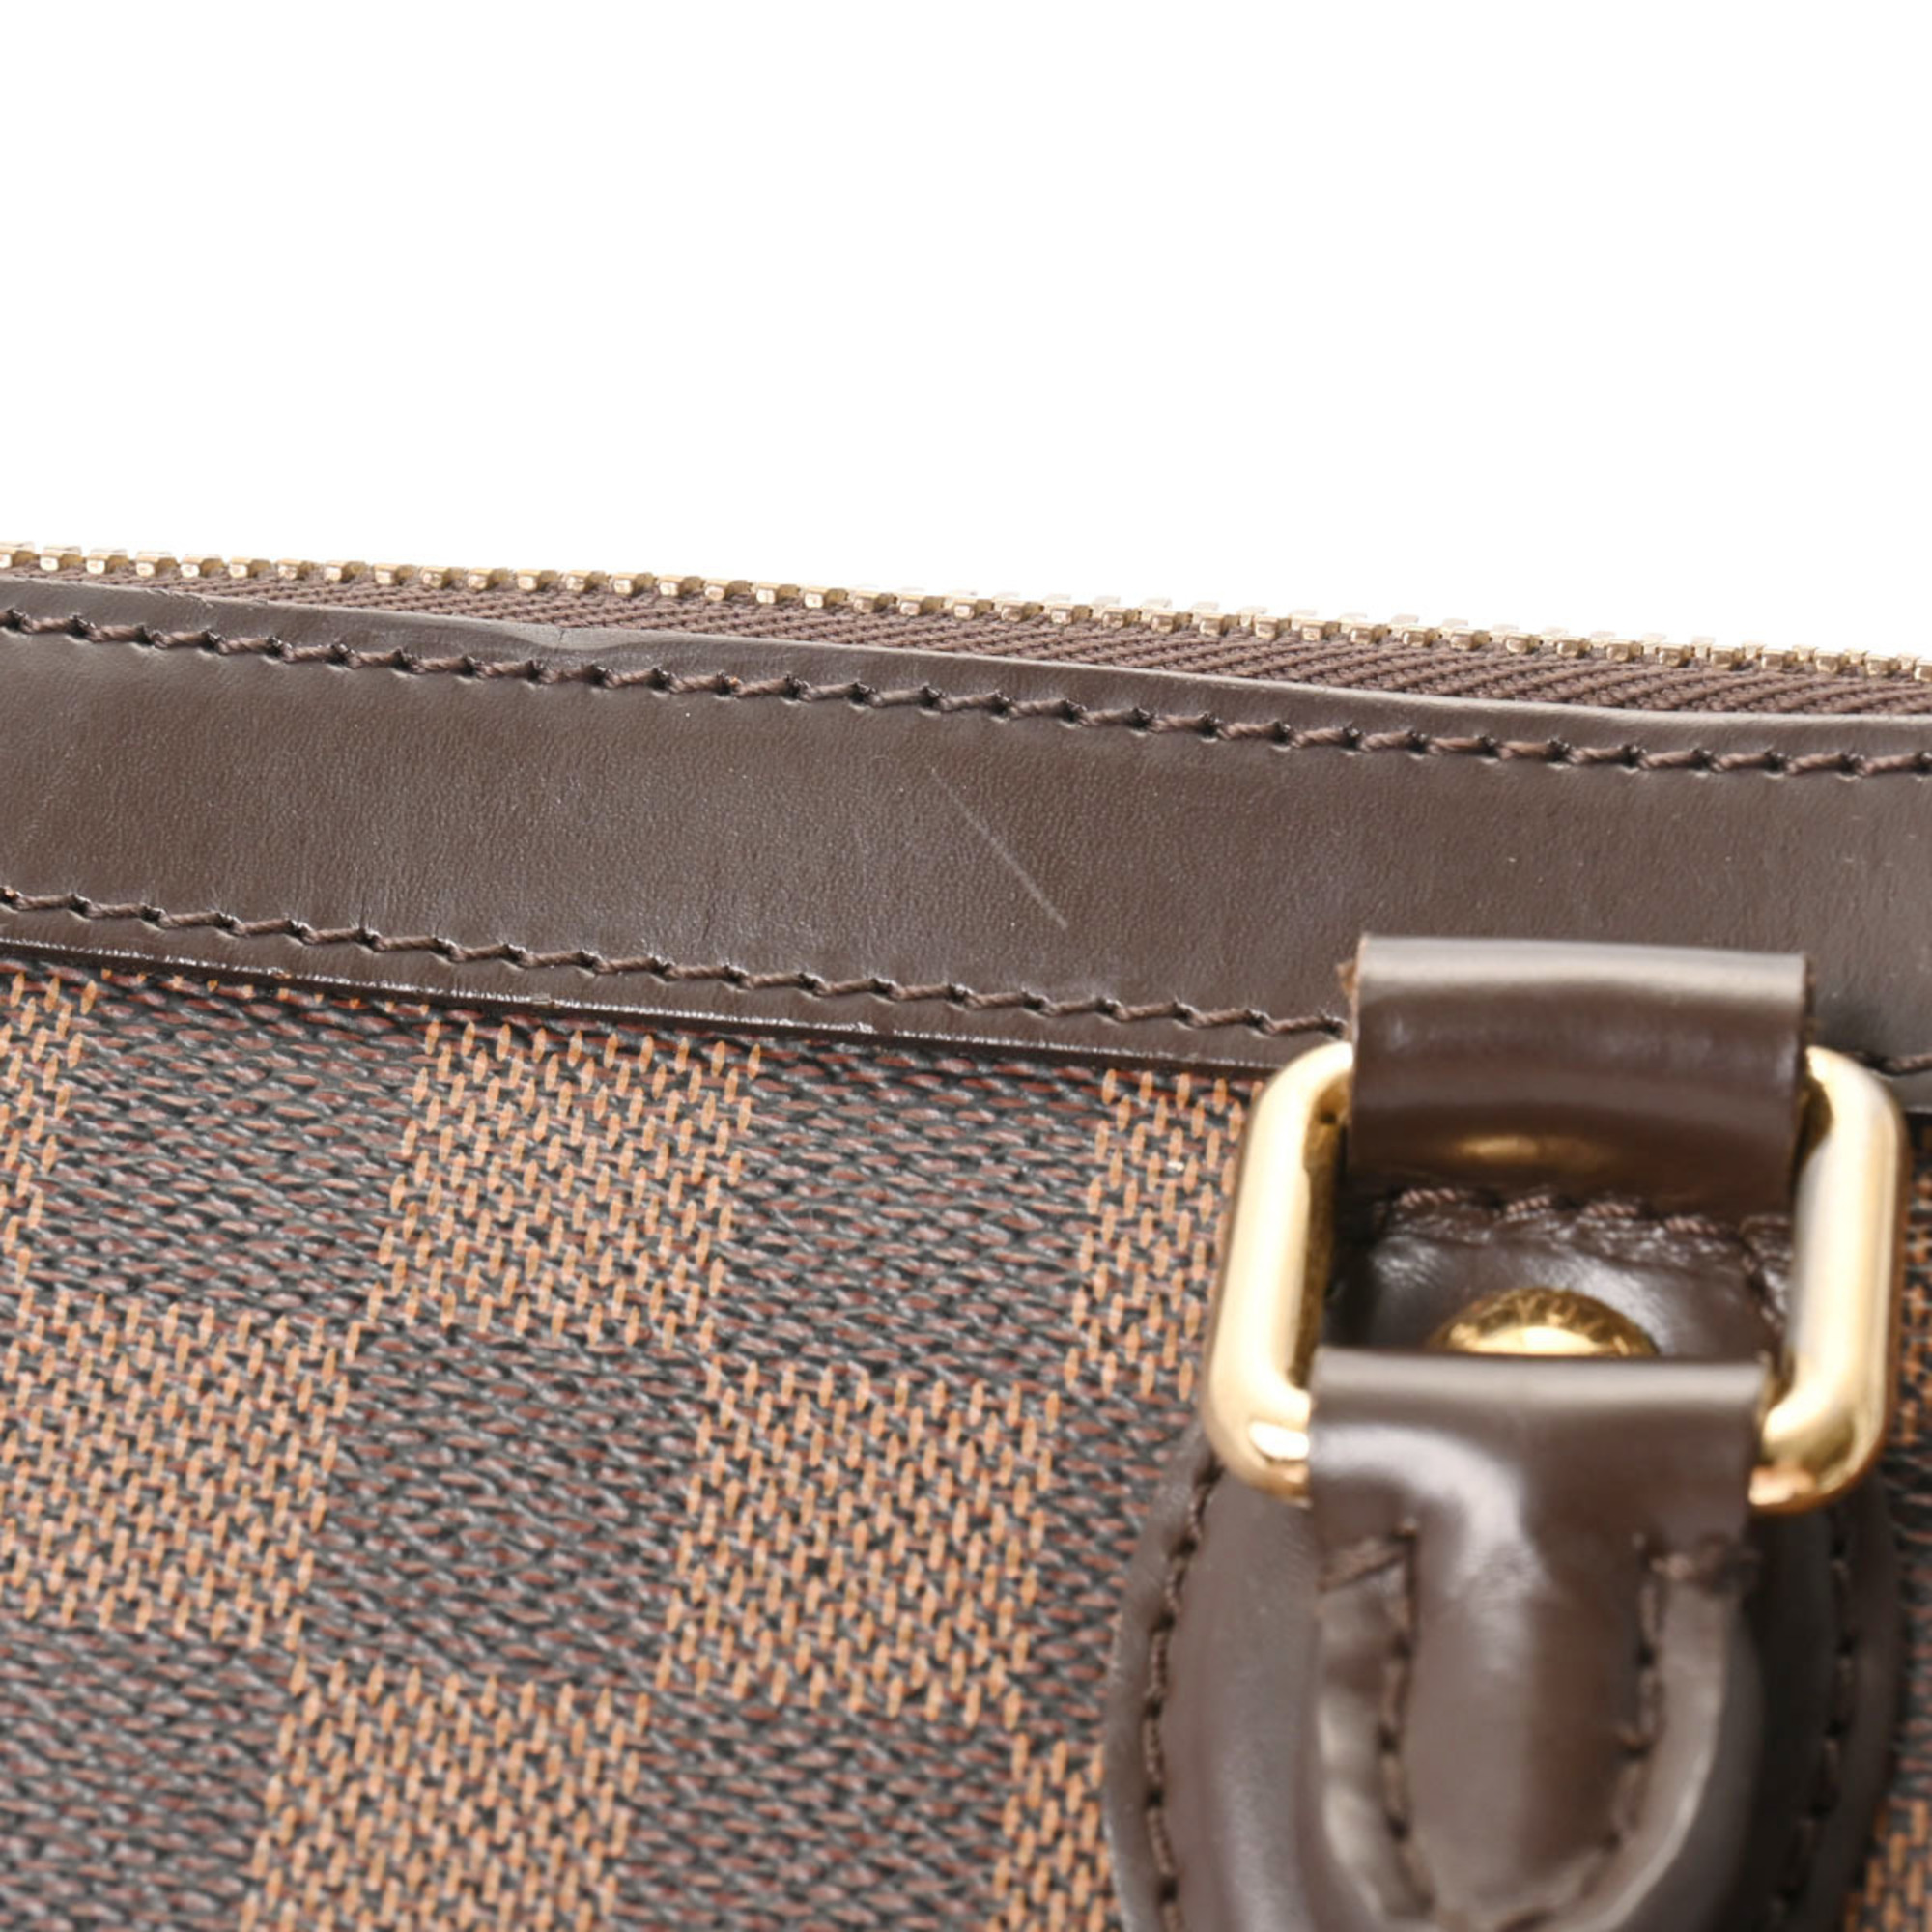 LOUIS VUITTON Damier Trevi GM Bag Brown N51998 Women's Canvas Handbag